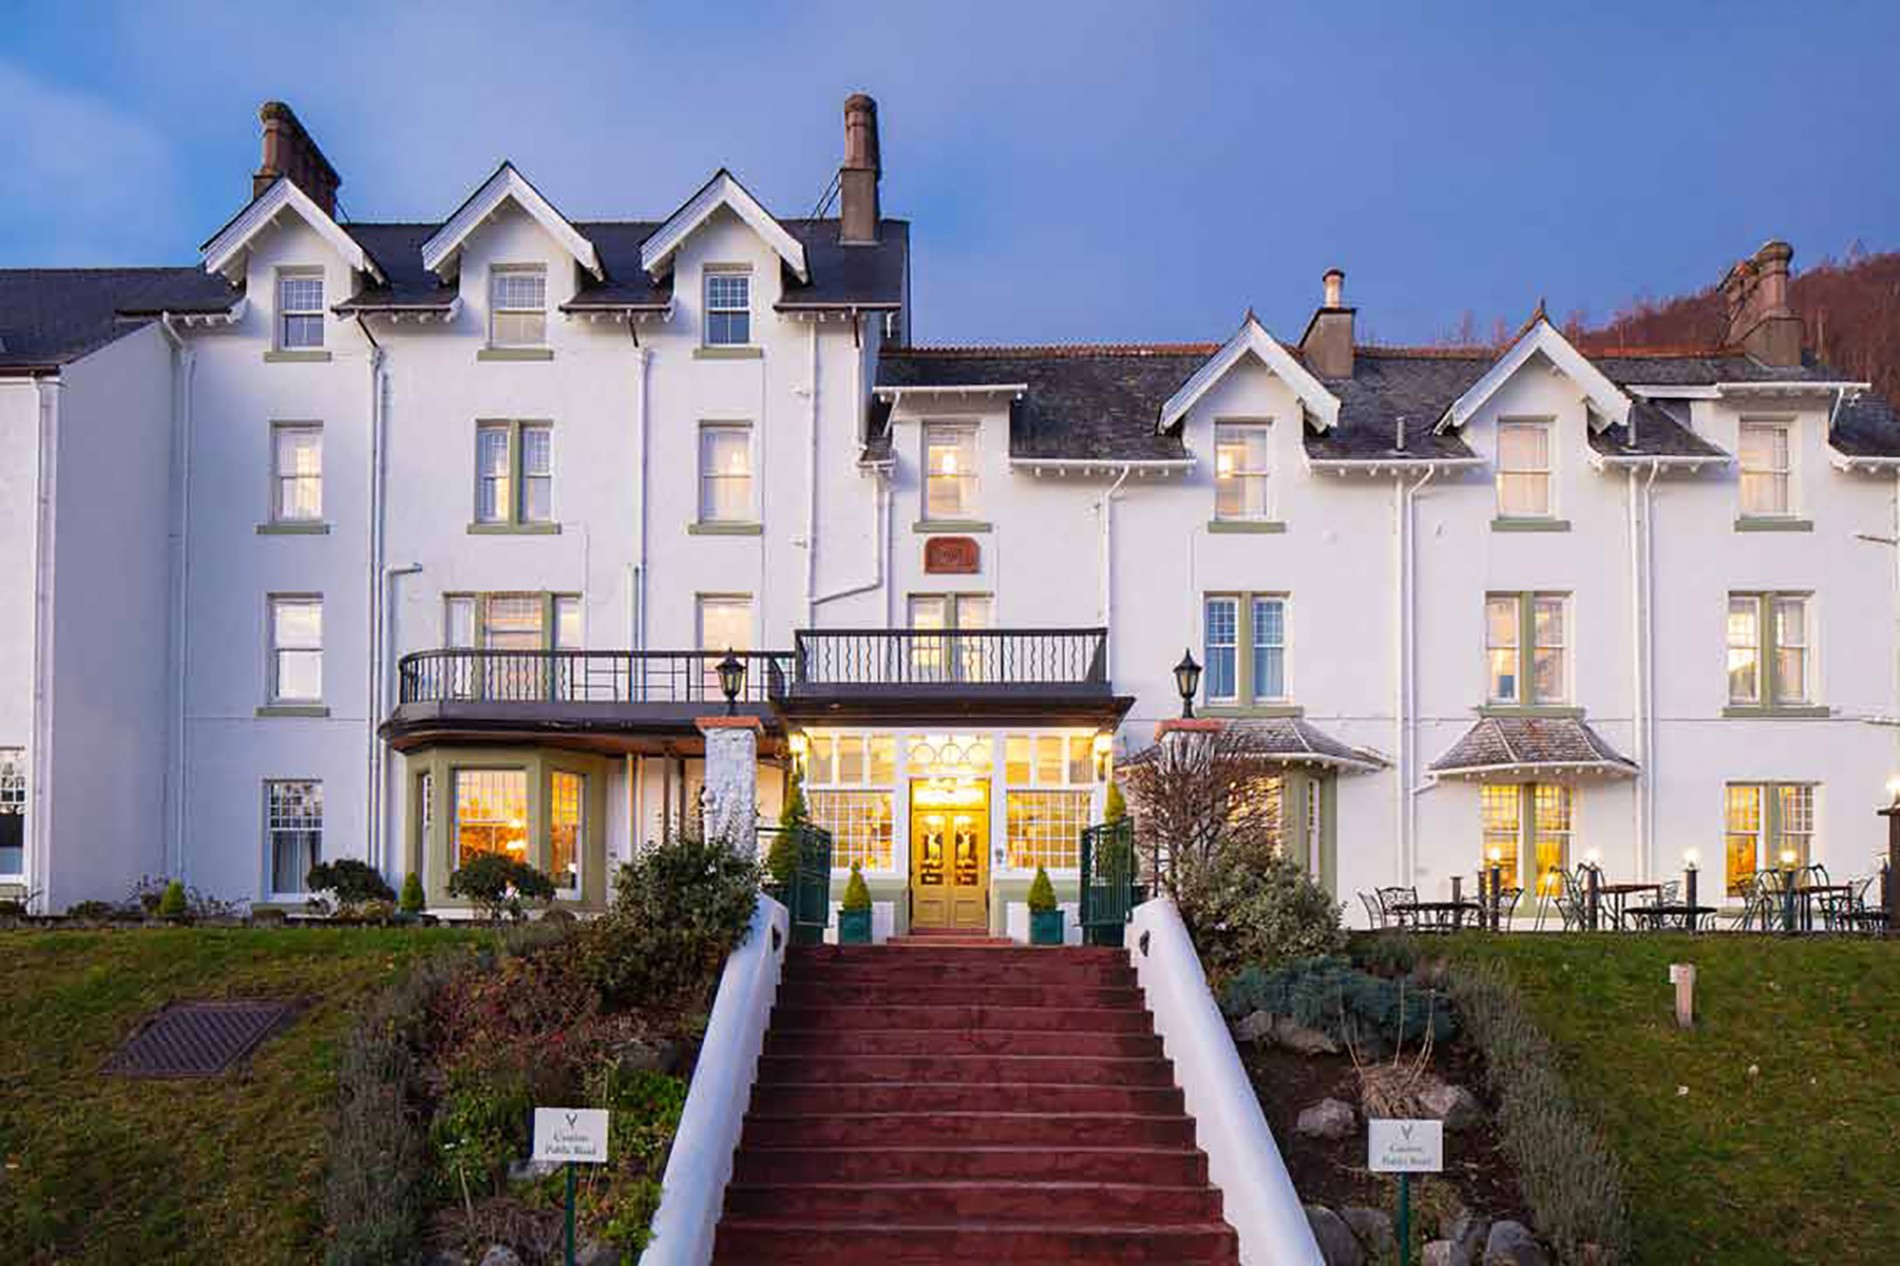 Loch Rannoch Hotel - 4 star hotel by Loch Rannoch